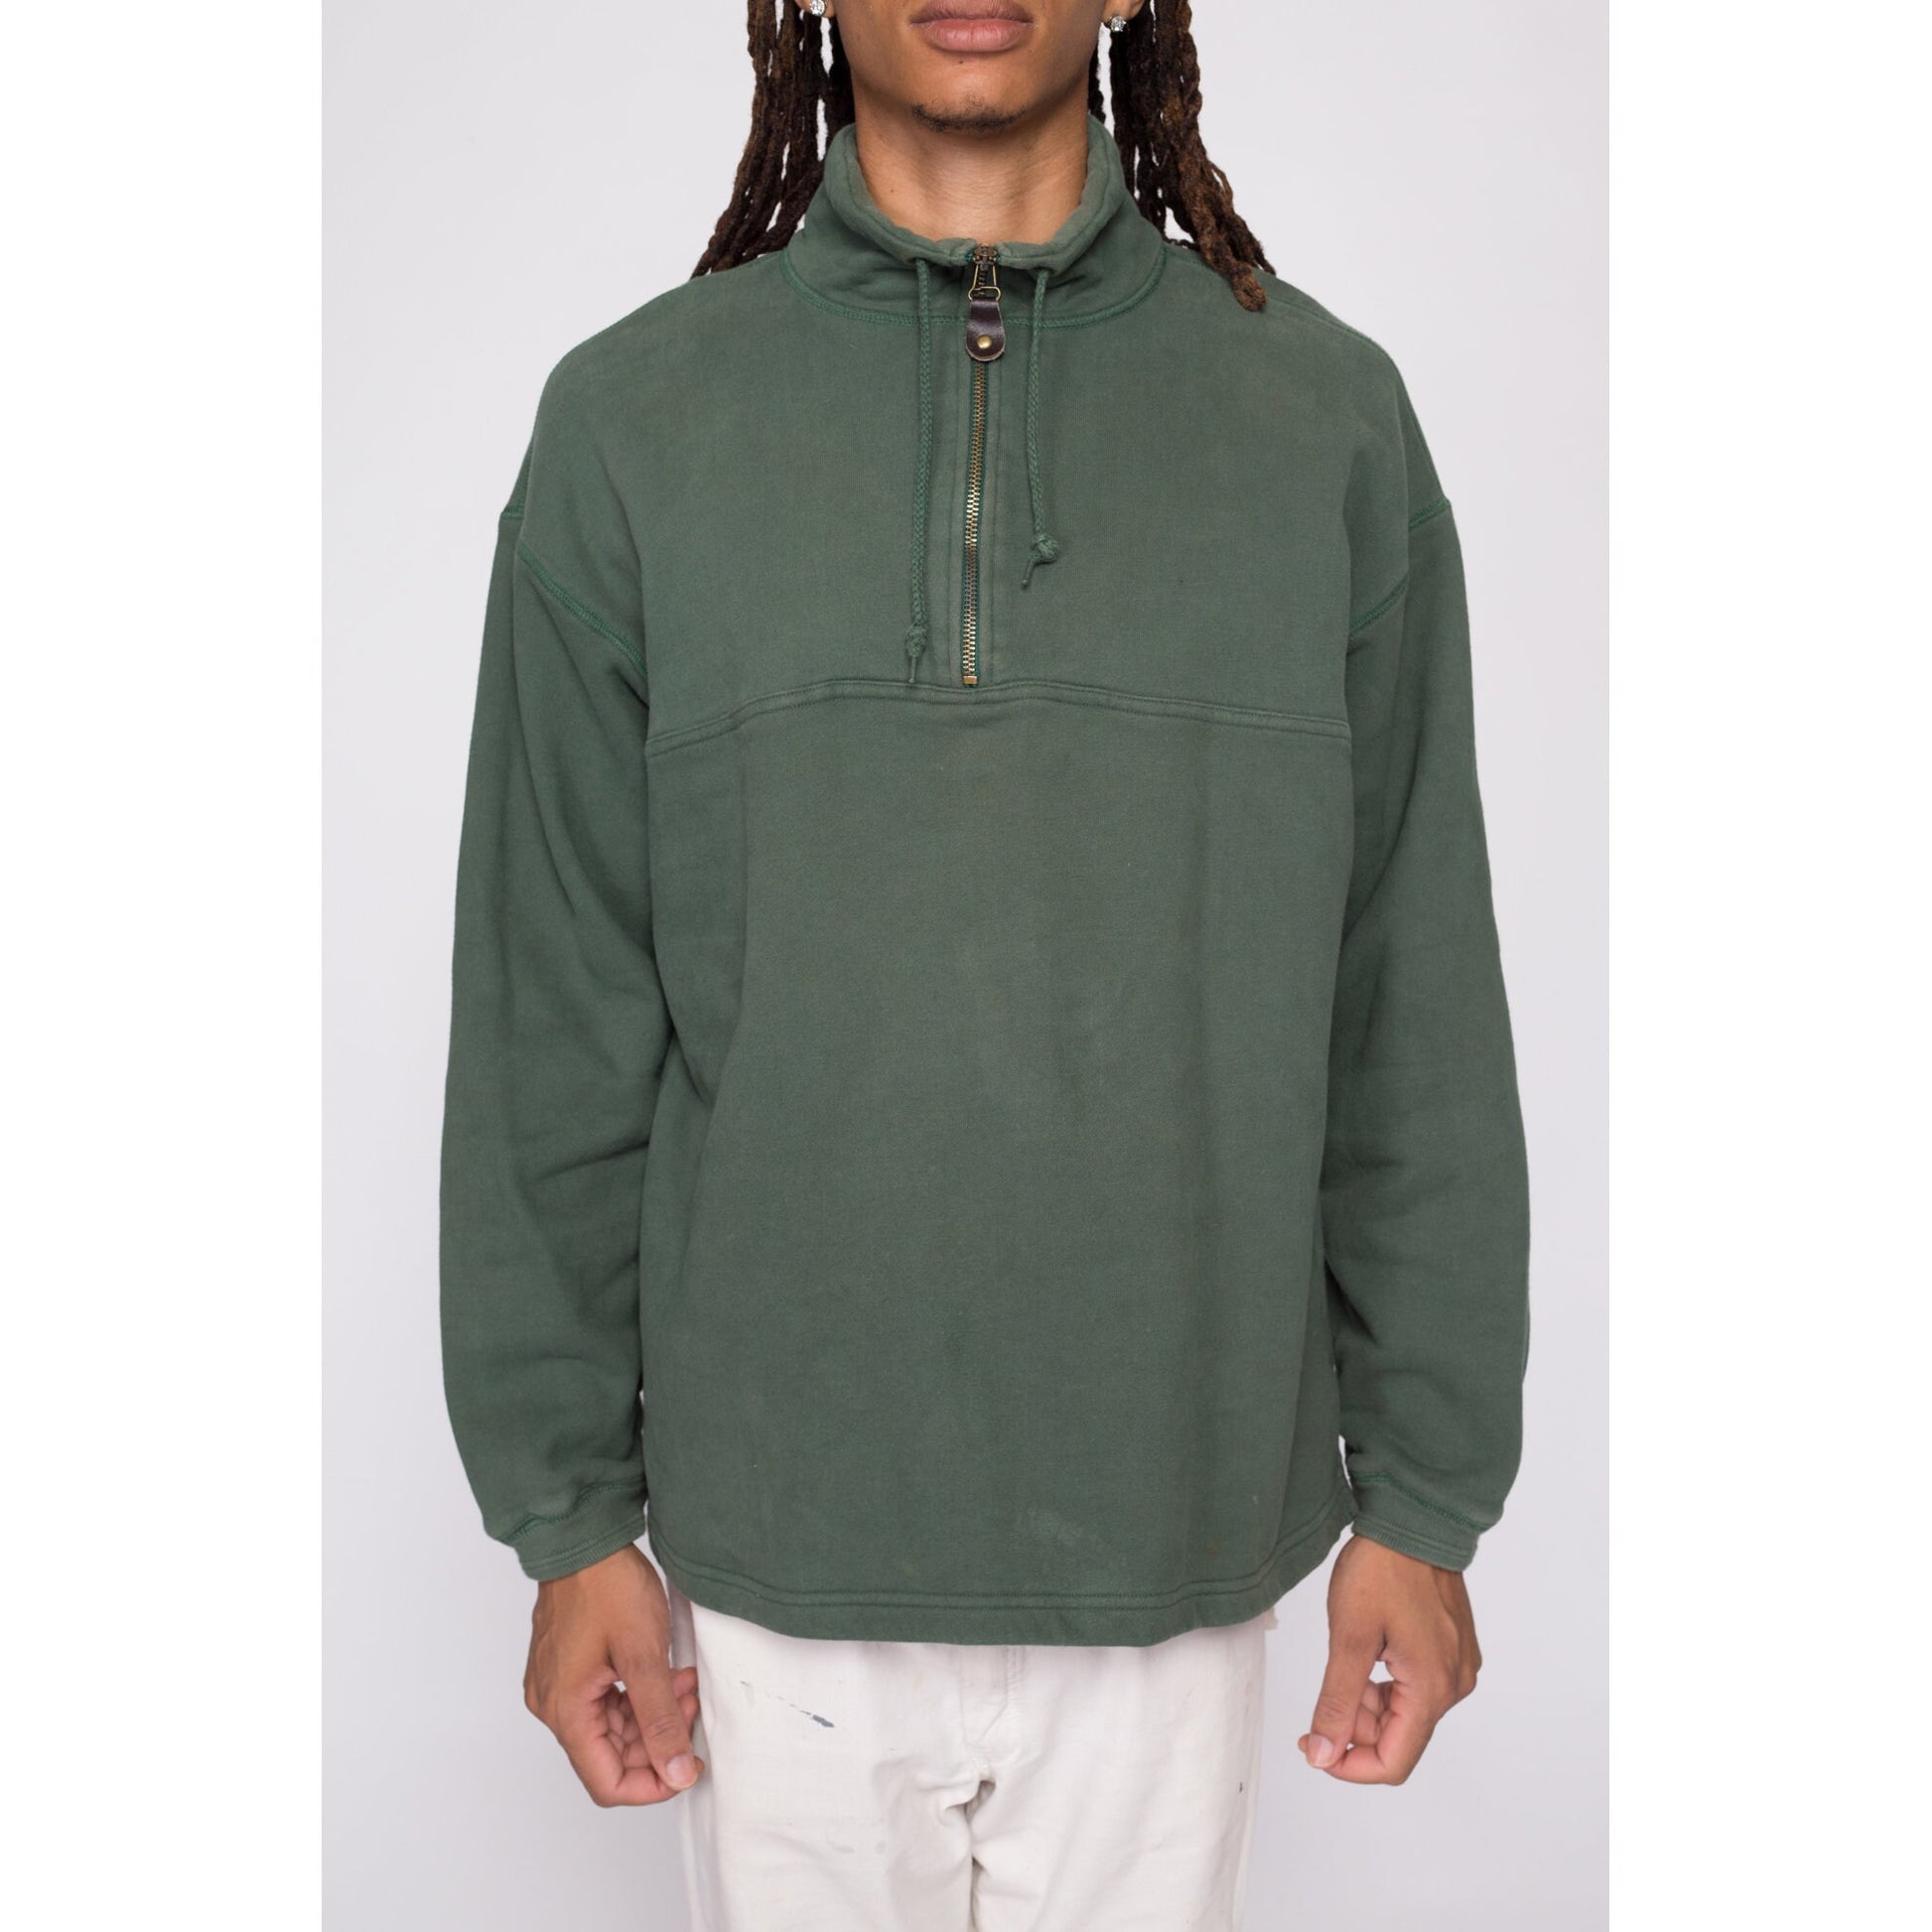 90s Crazy Shirts Hawaii Quarter Zip Sweatshirt - Men's Large | Vintage Army Green High Neck Soft Cotton Pullover